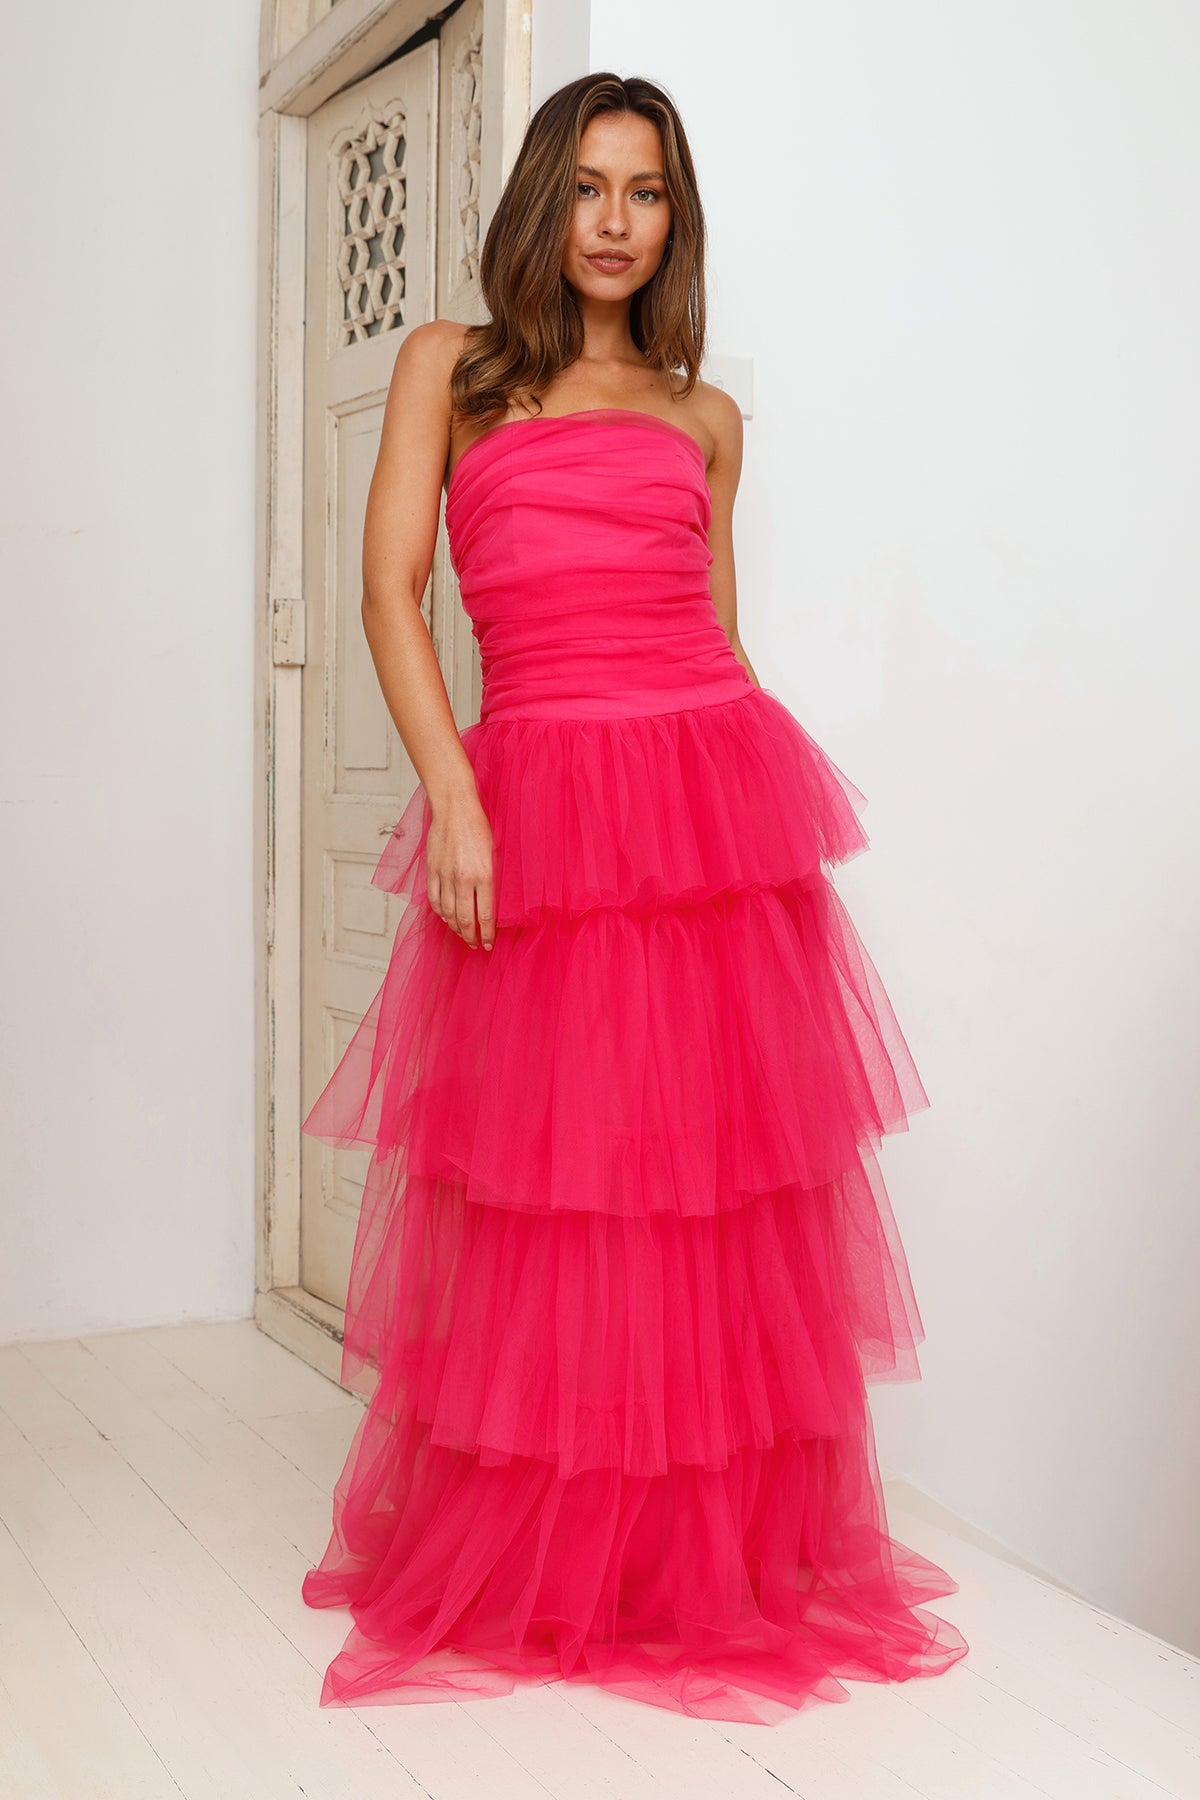 Shop Formal Dress - Hidden Opal Strapless Tulle Maxi Dress Hot Pink fourth image